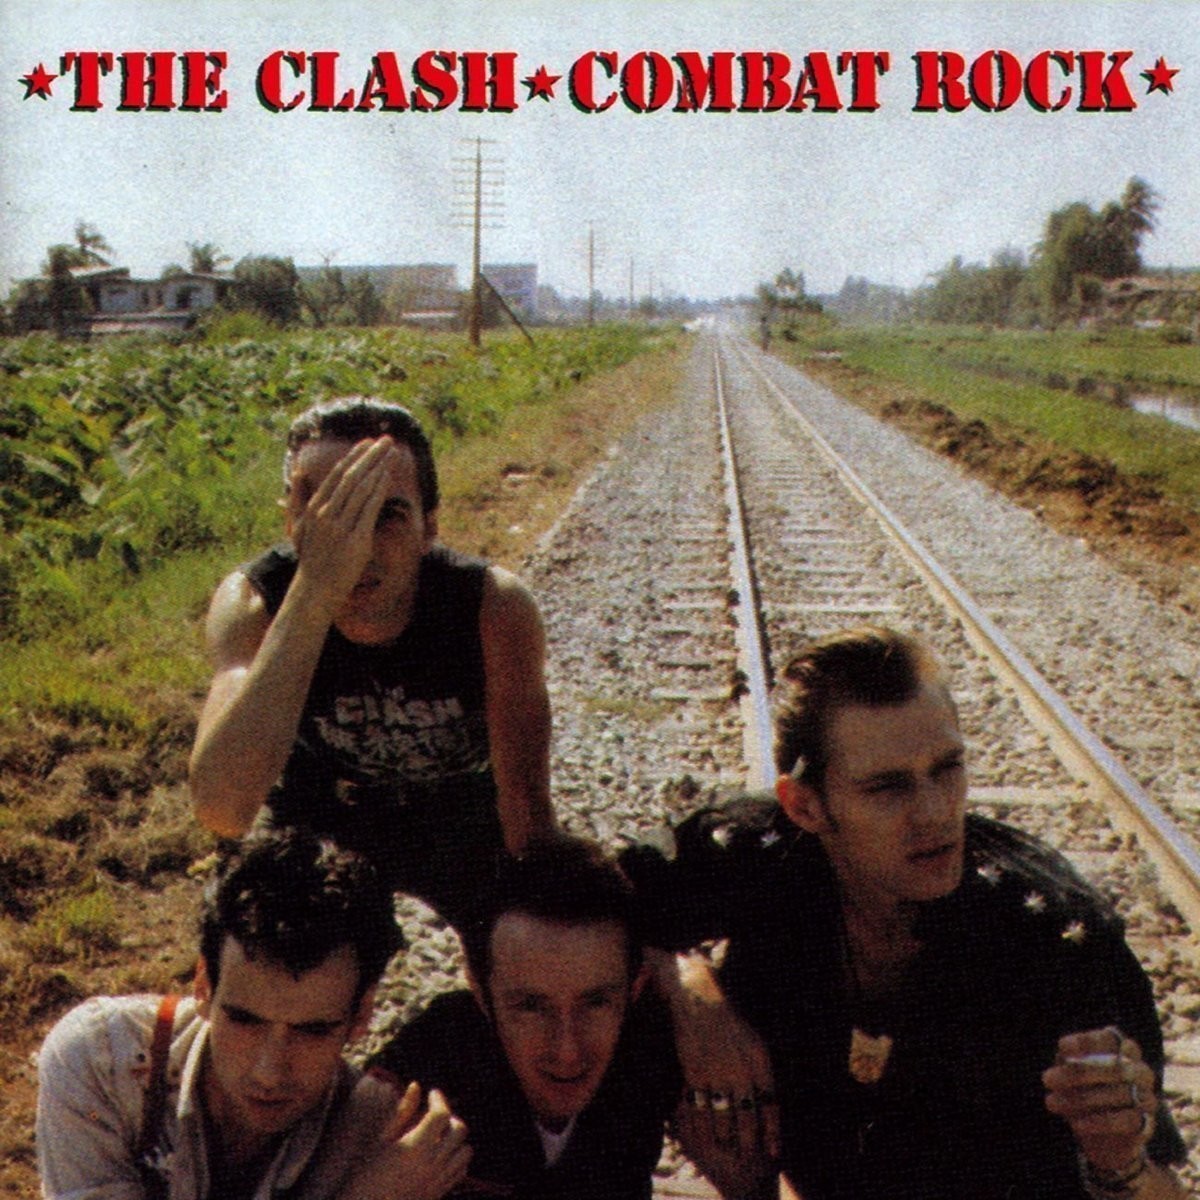 The Clash - Combat Rock - Vinyl